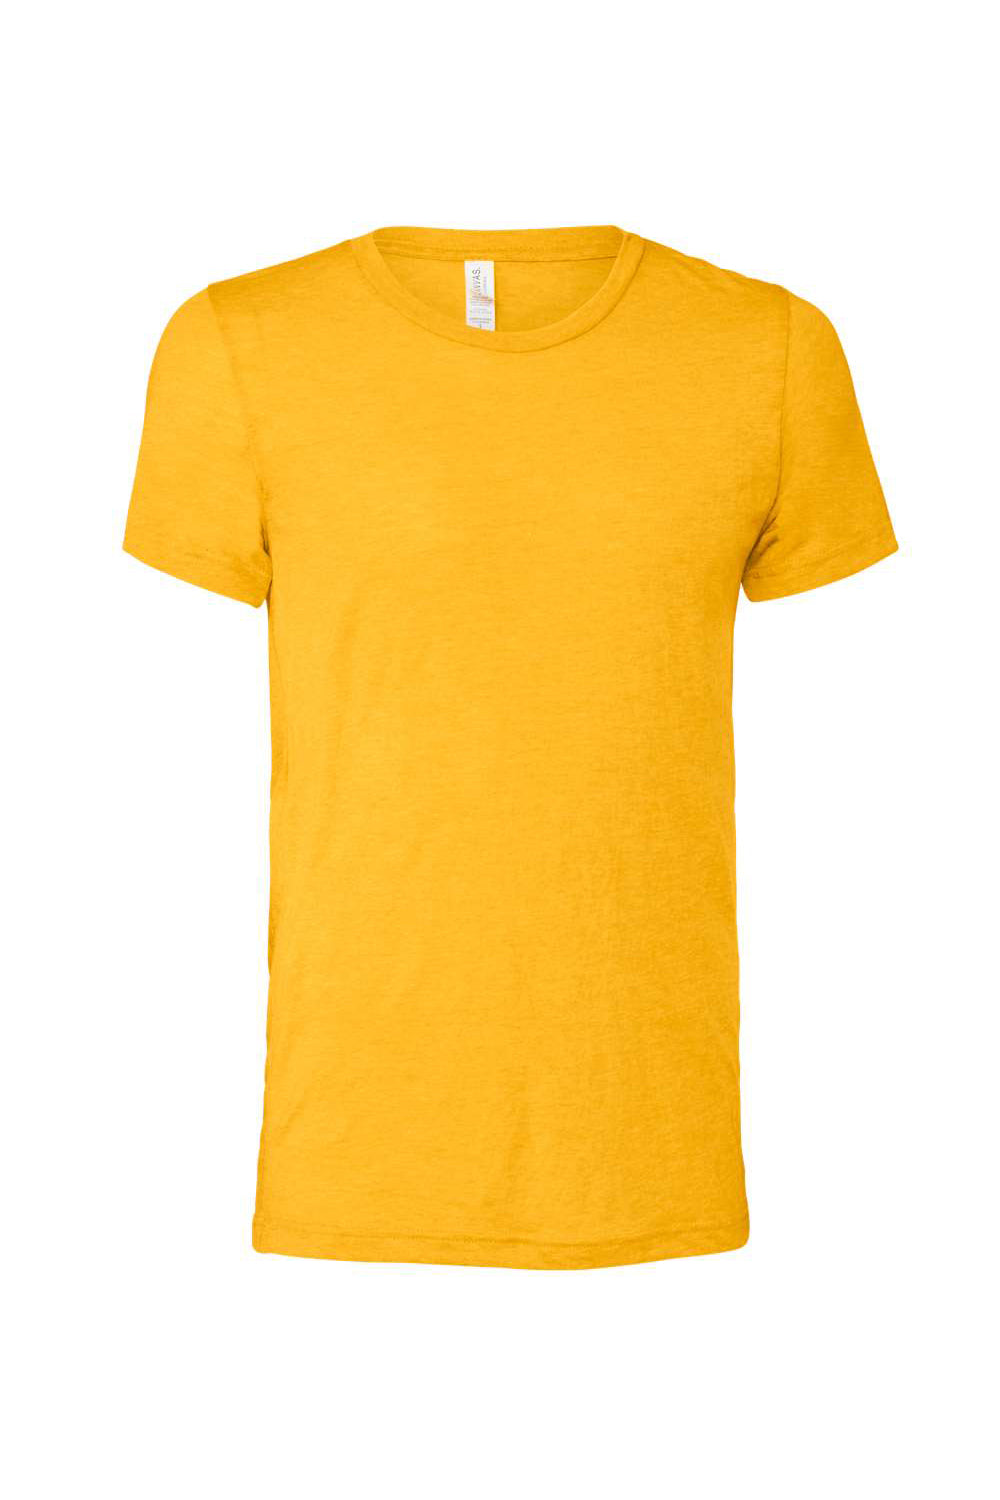 Bella + Canvas BC3413/3413C/3413 Mens Short Sleeve Crewneck T-Shirt Yellow Gold Flat Front